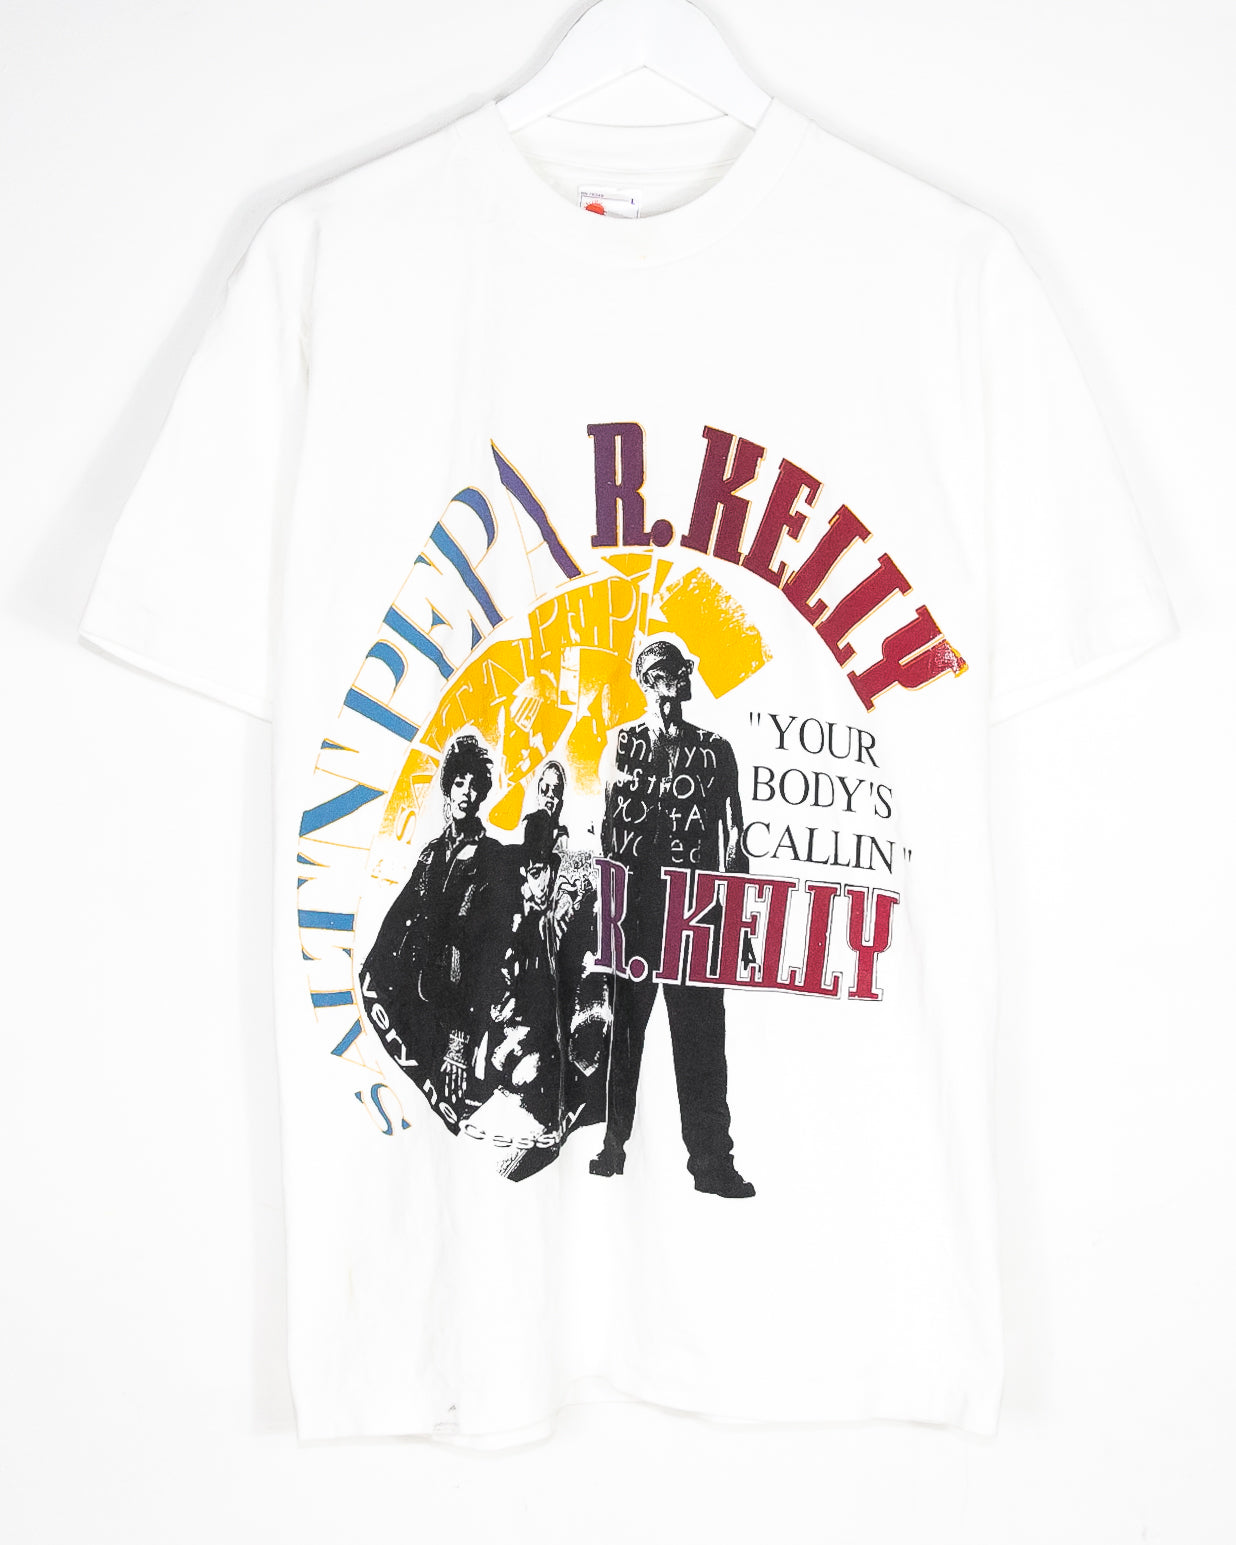 Vintage Salt n’ Pepa &amp; R.Kelly 90s T-shirt (L/XL)